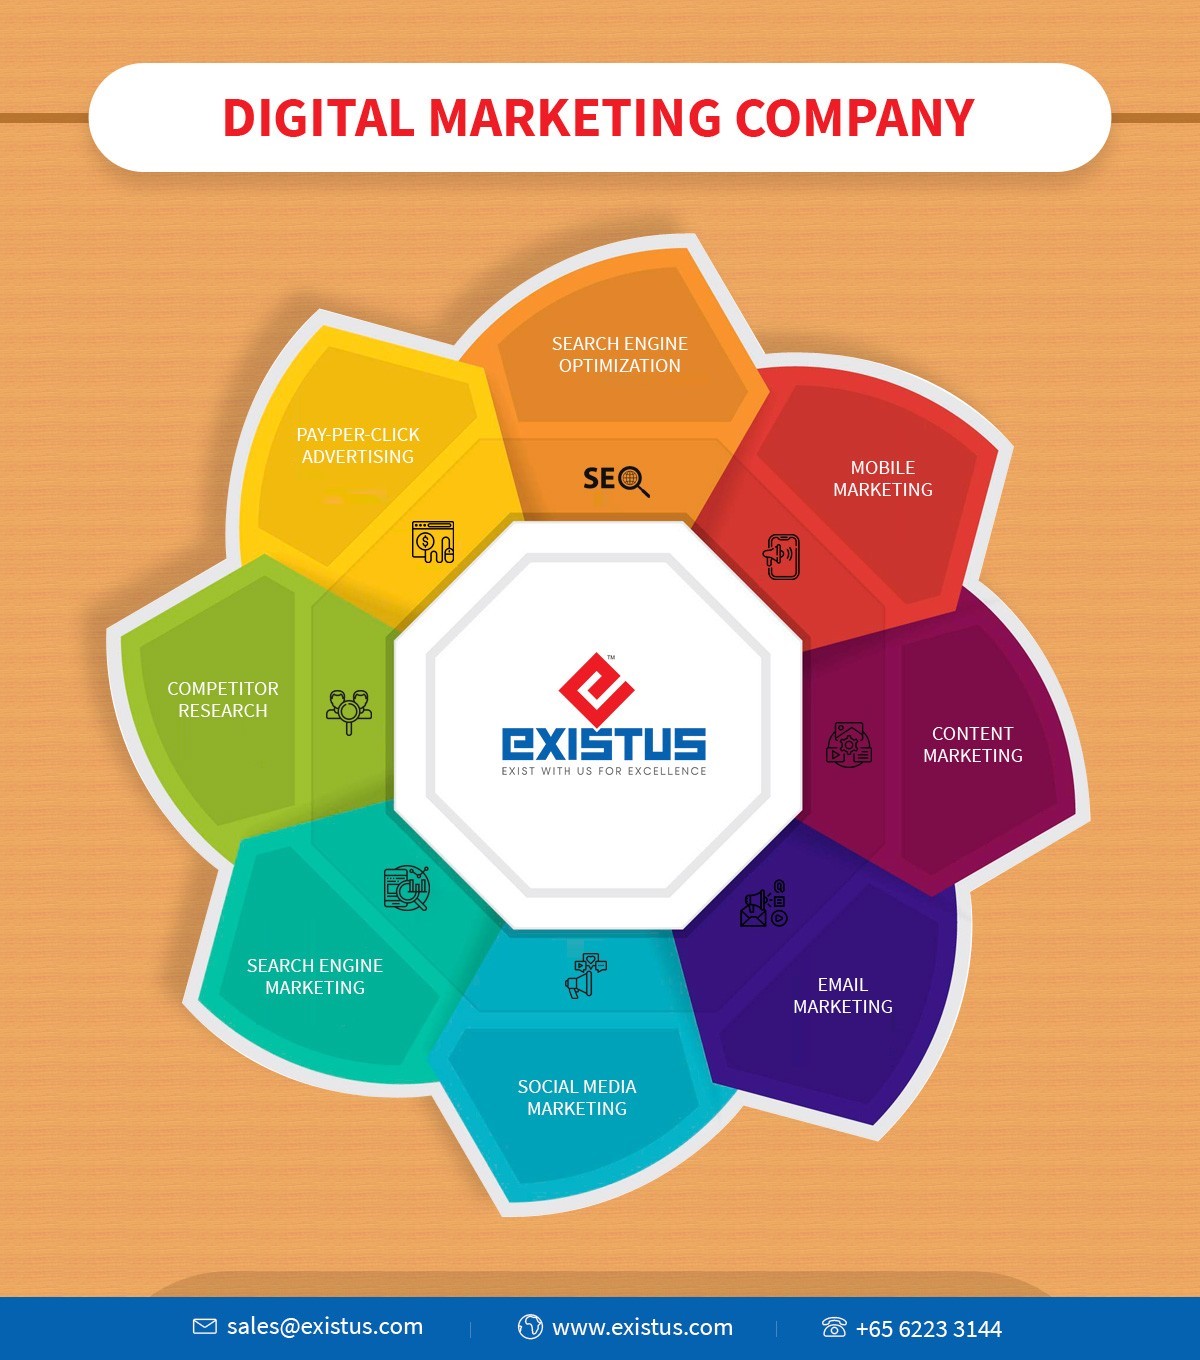 Best Digital Marketing Services in Singapore